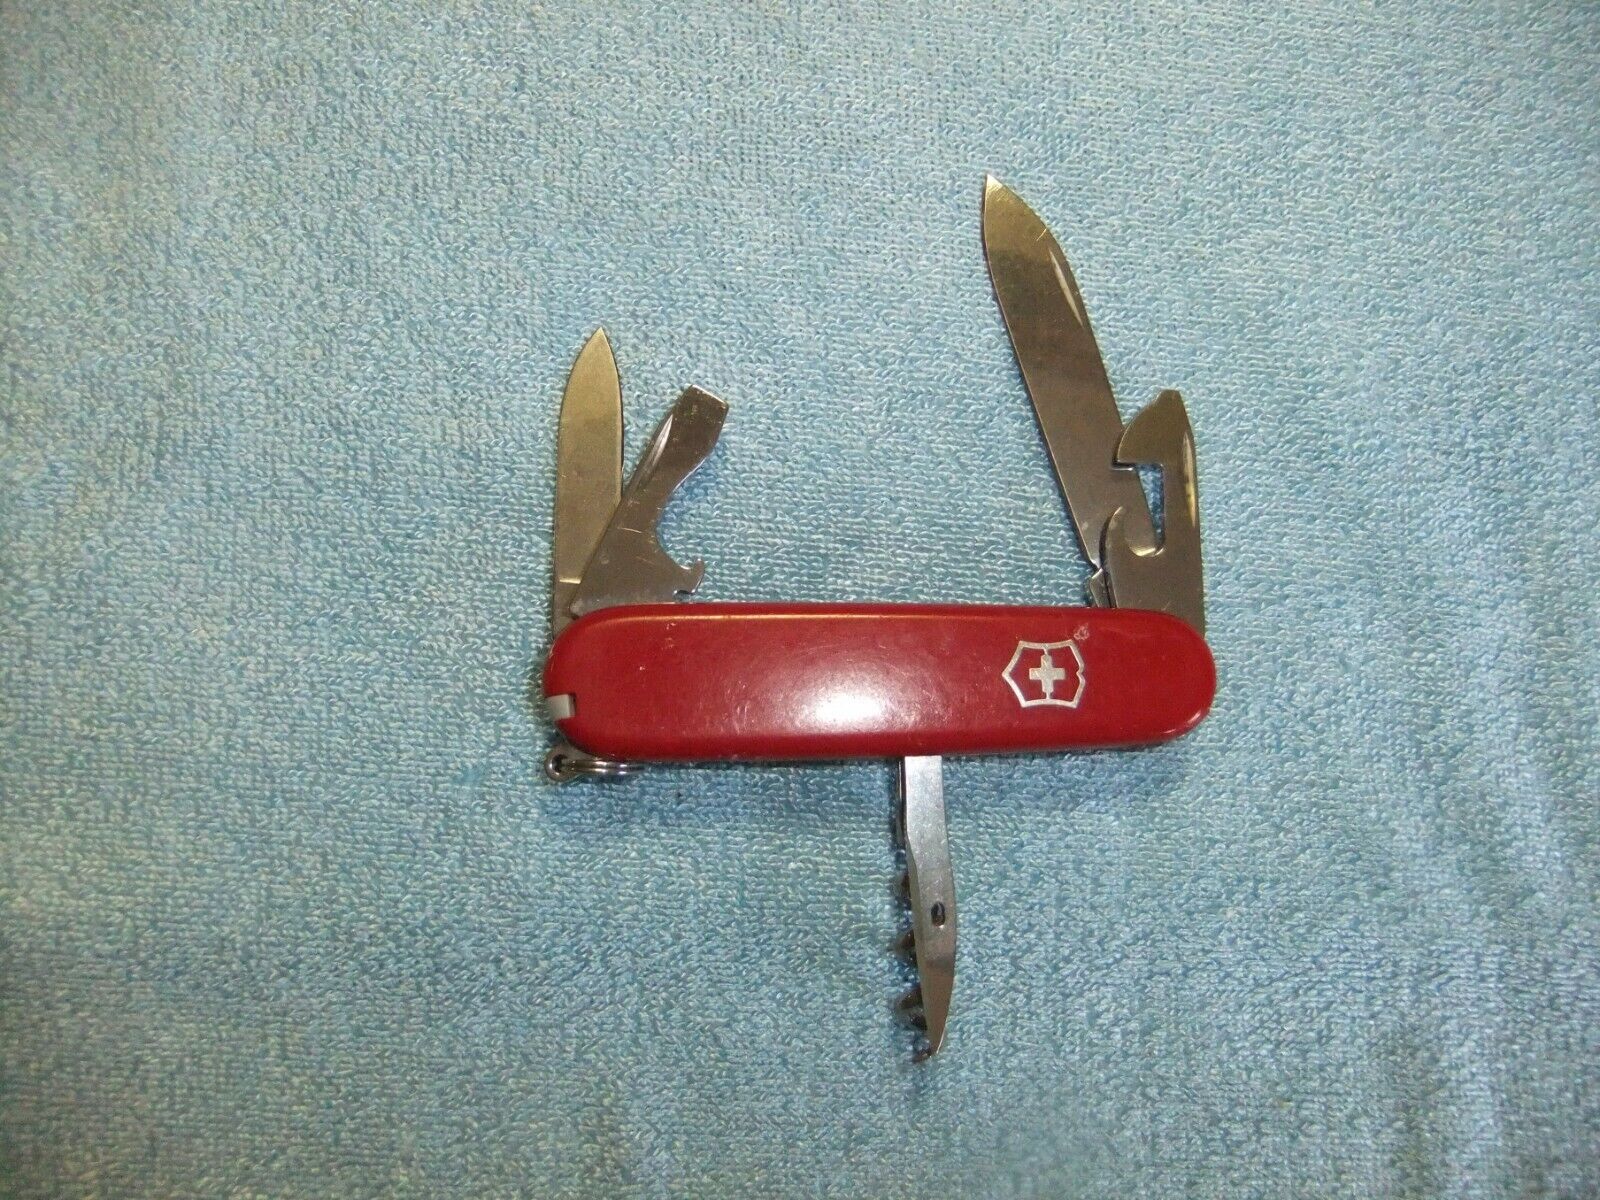 Victorinox Spartan Swiss Army Knife - Original Swiss Army Knife w/Great Tool Set